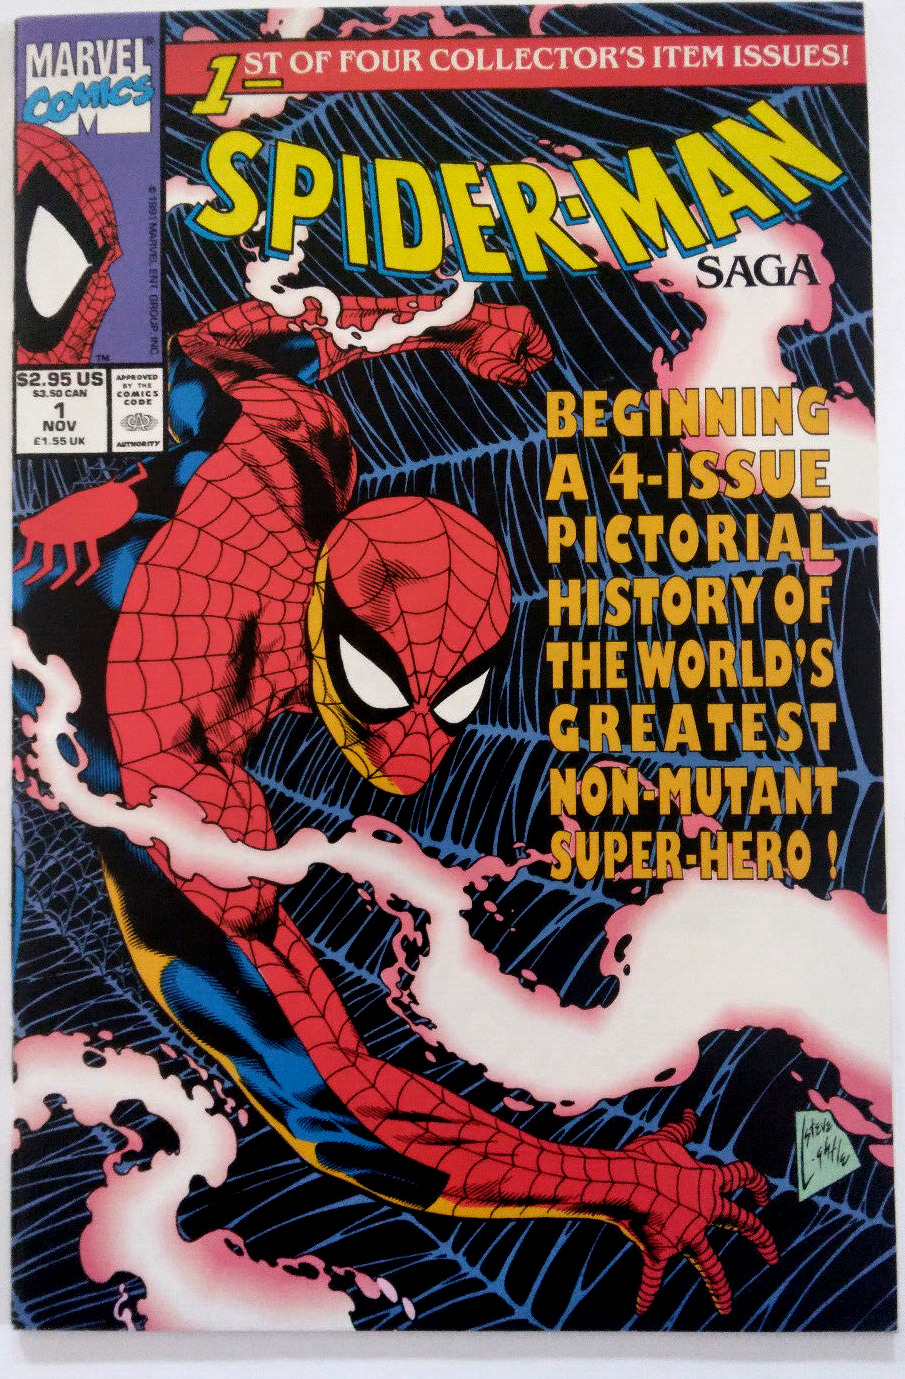 Spider-Man Saga #1 1991 - High Grade - Pictorial History Of Spider-Man